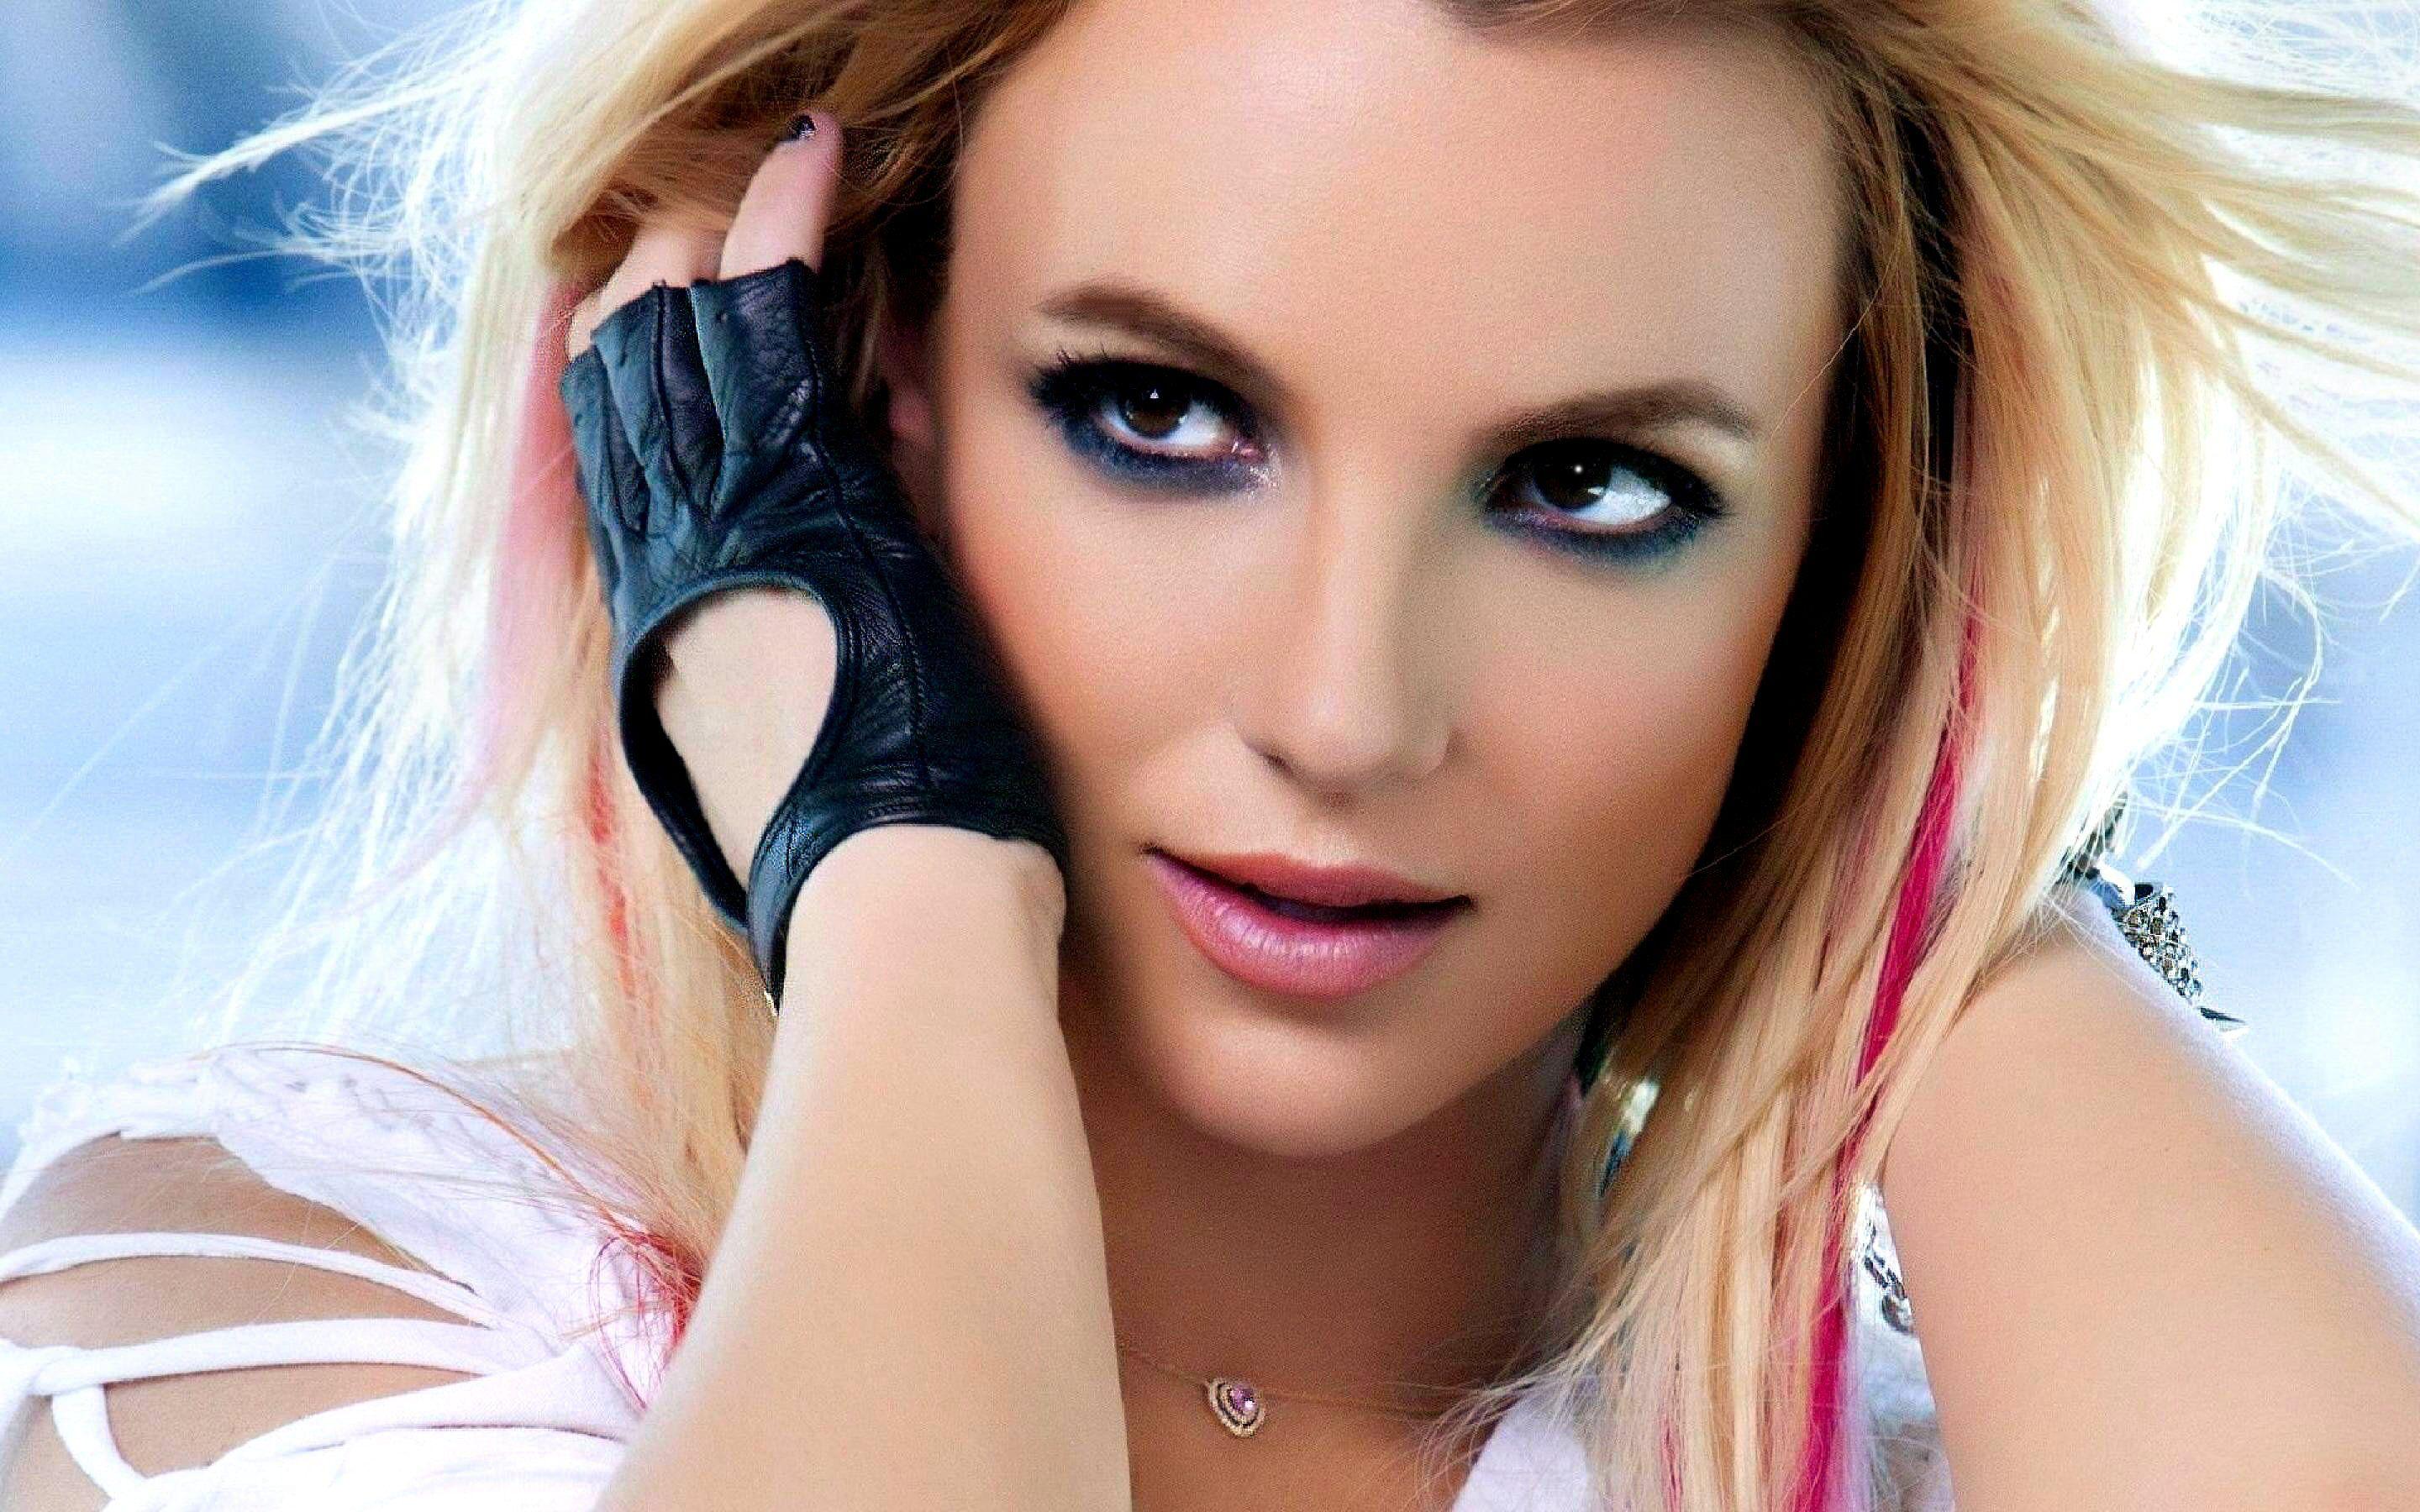 AMAZING BABE [17] Britney S [VersionOne032215